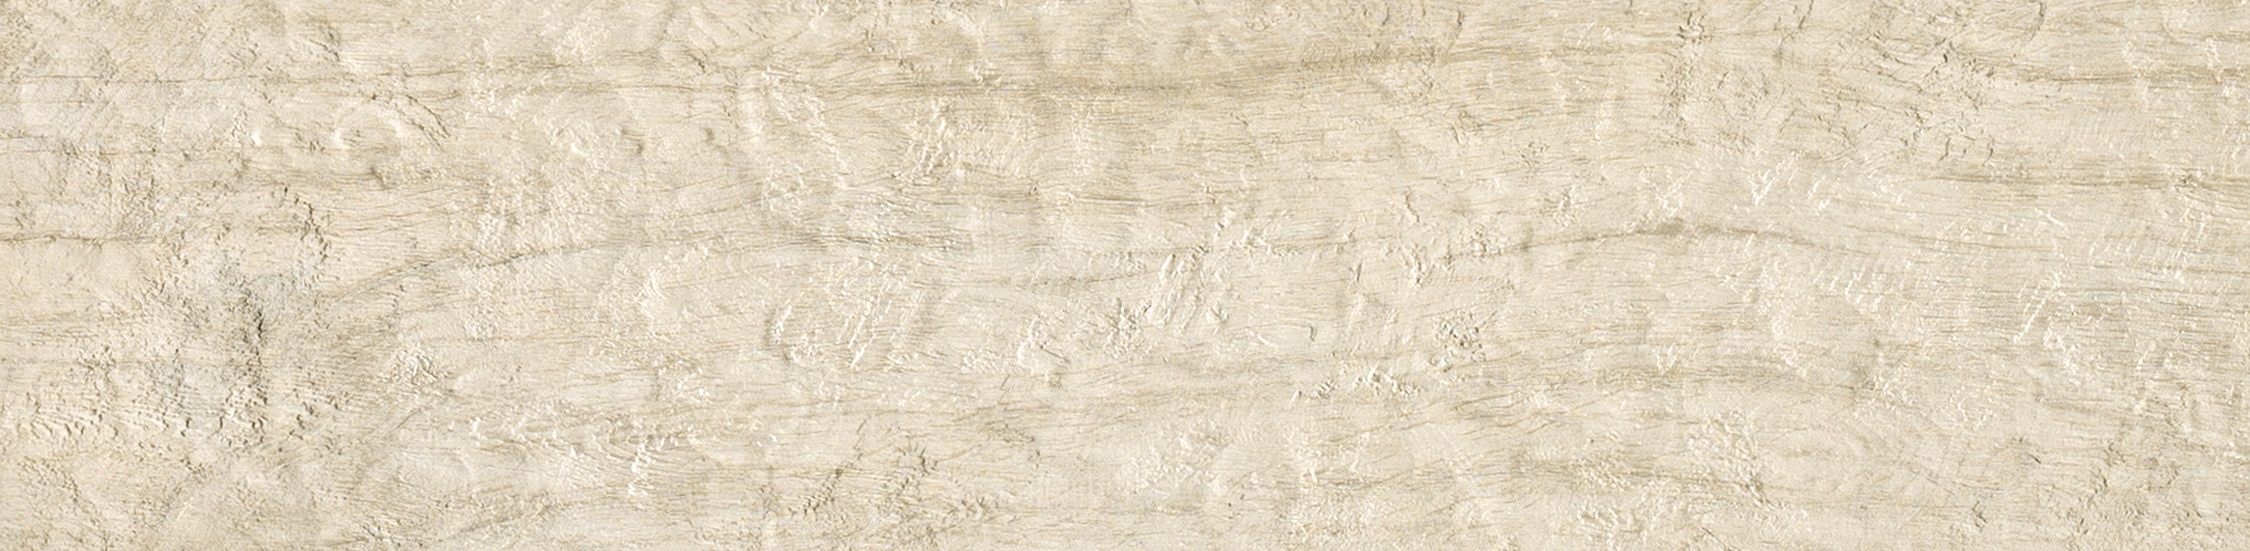 Керамогранит ИТАЛОН NL-Wood Нордик Грип 22,5*90  (6шт-1,215 м.кв)